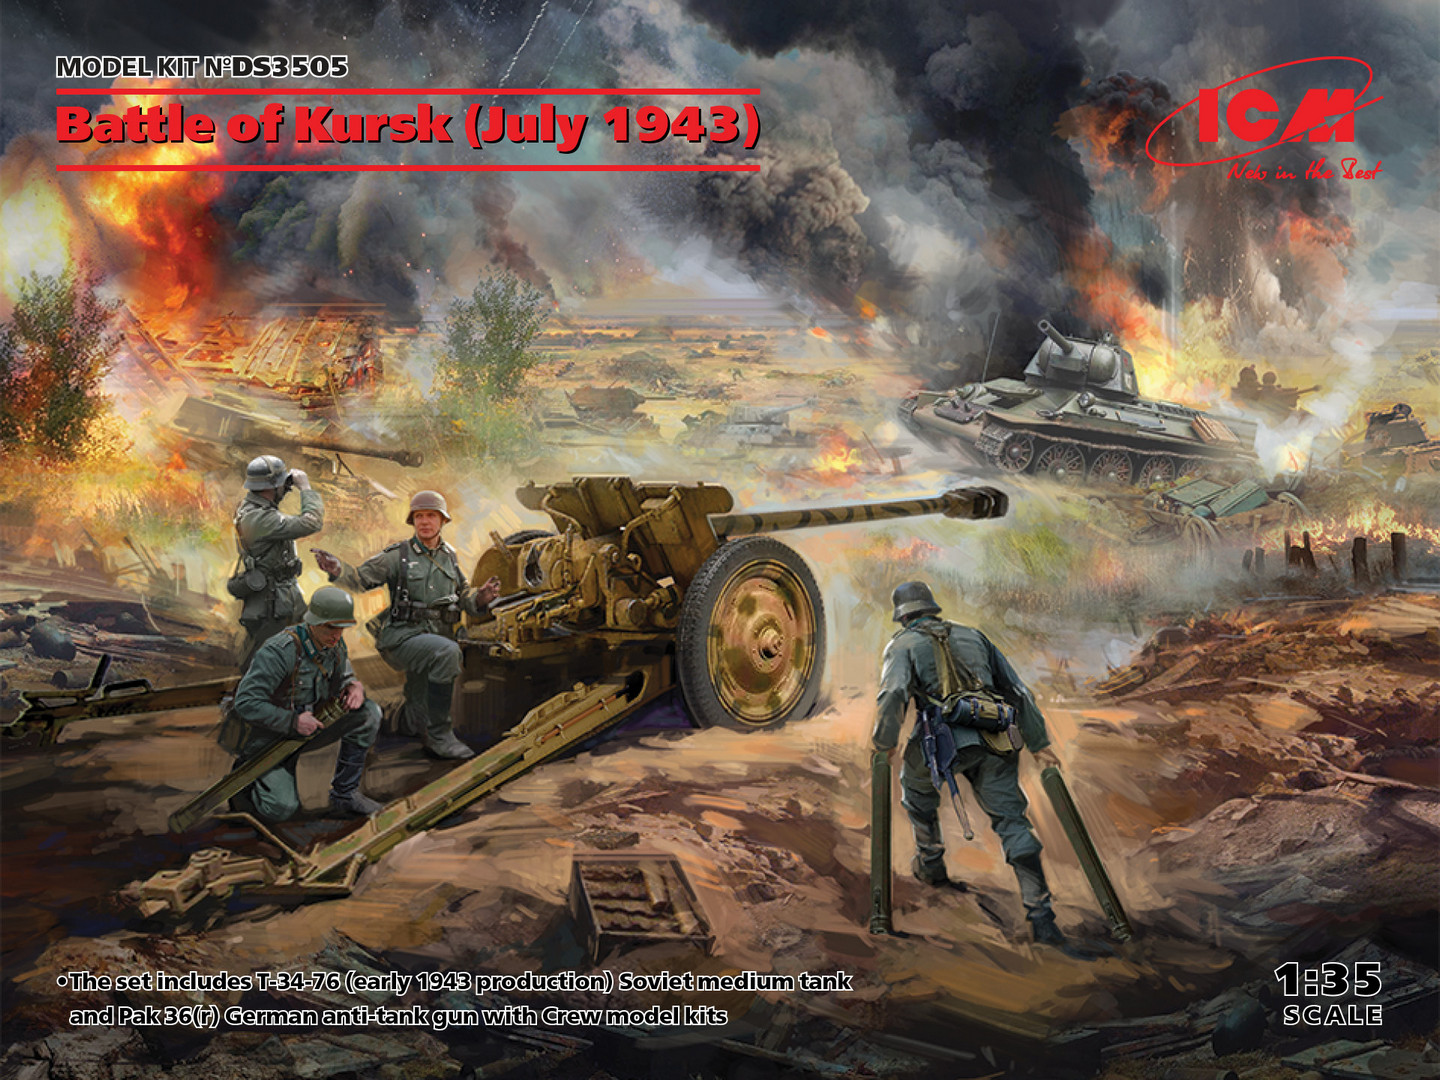 Battle of Kursk (July 1943)